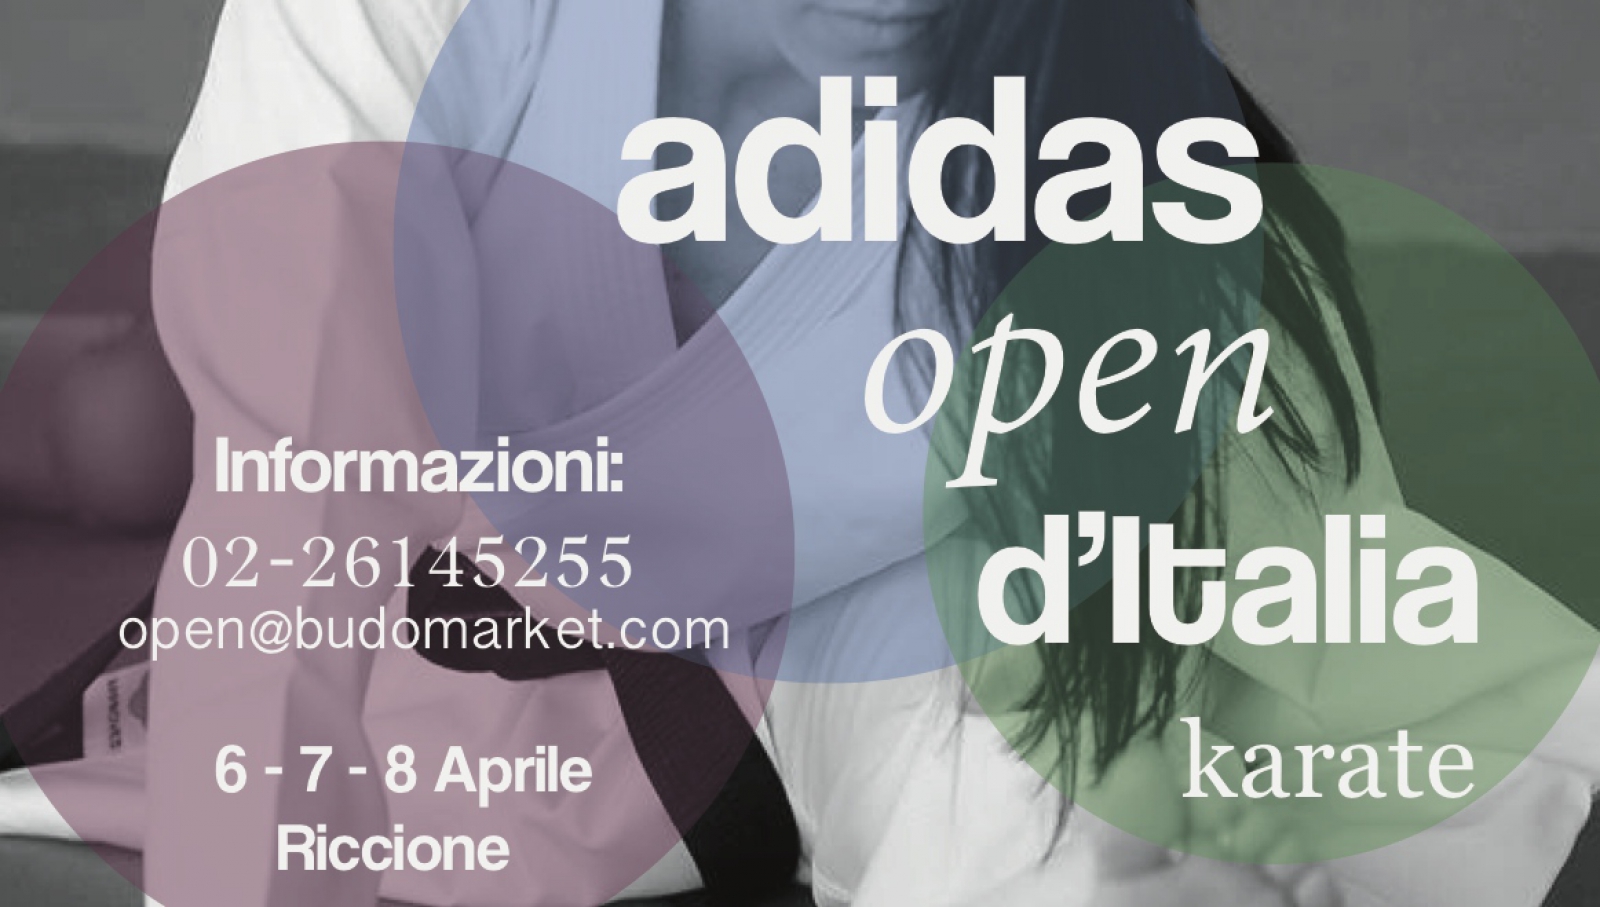 adidas open italia